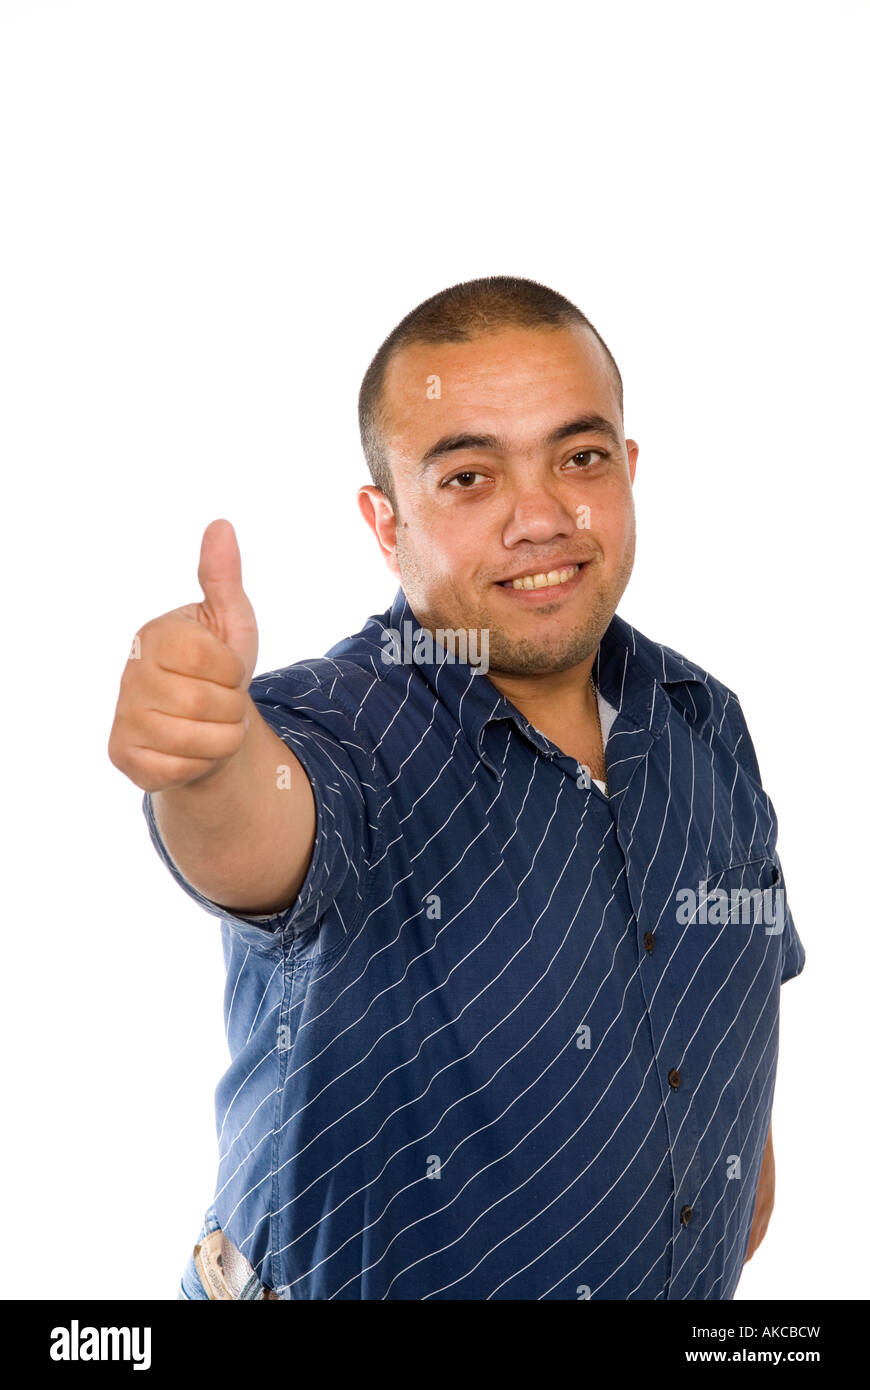 Midget man thumbs up Stock Photo